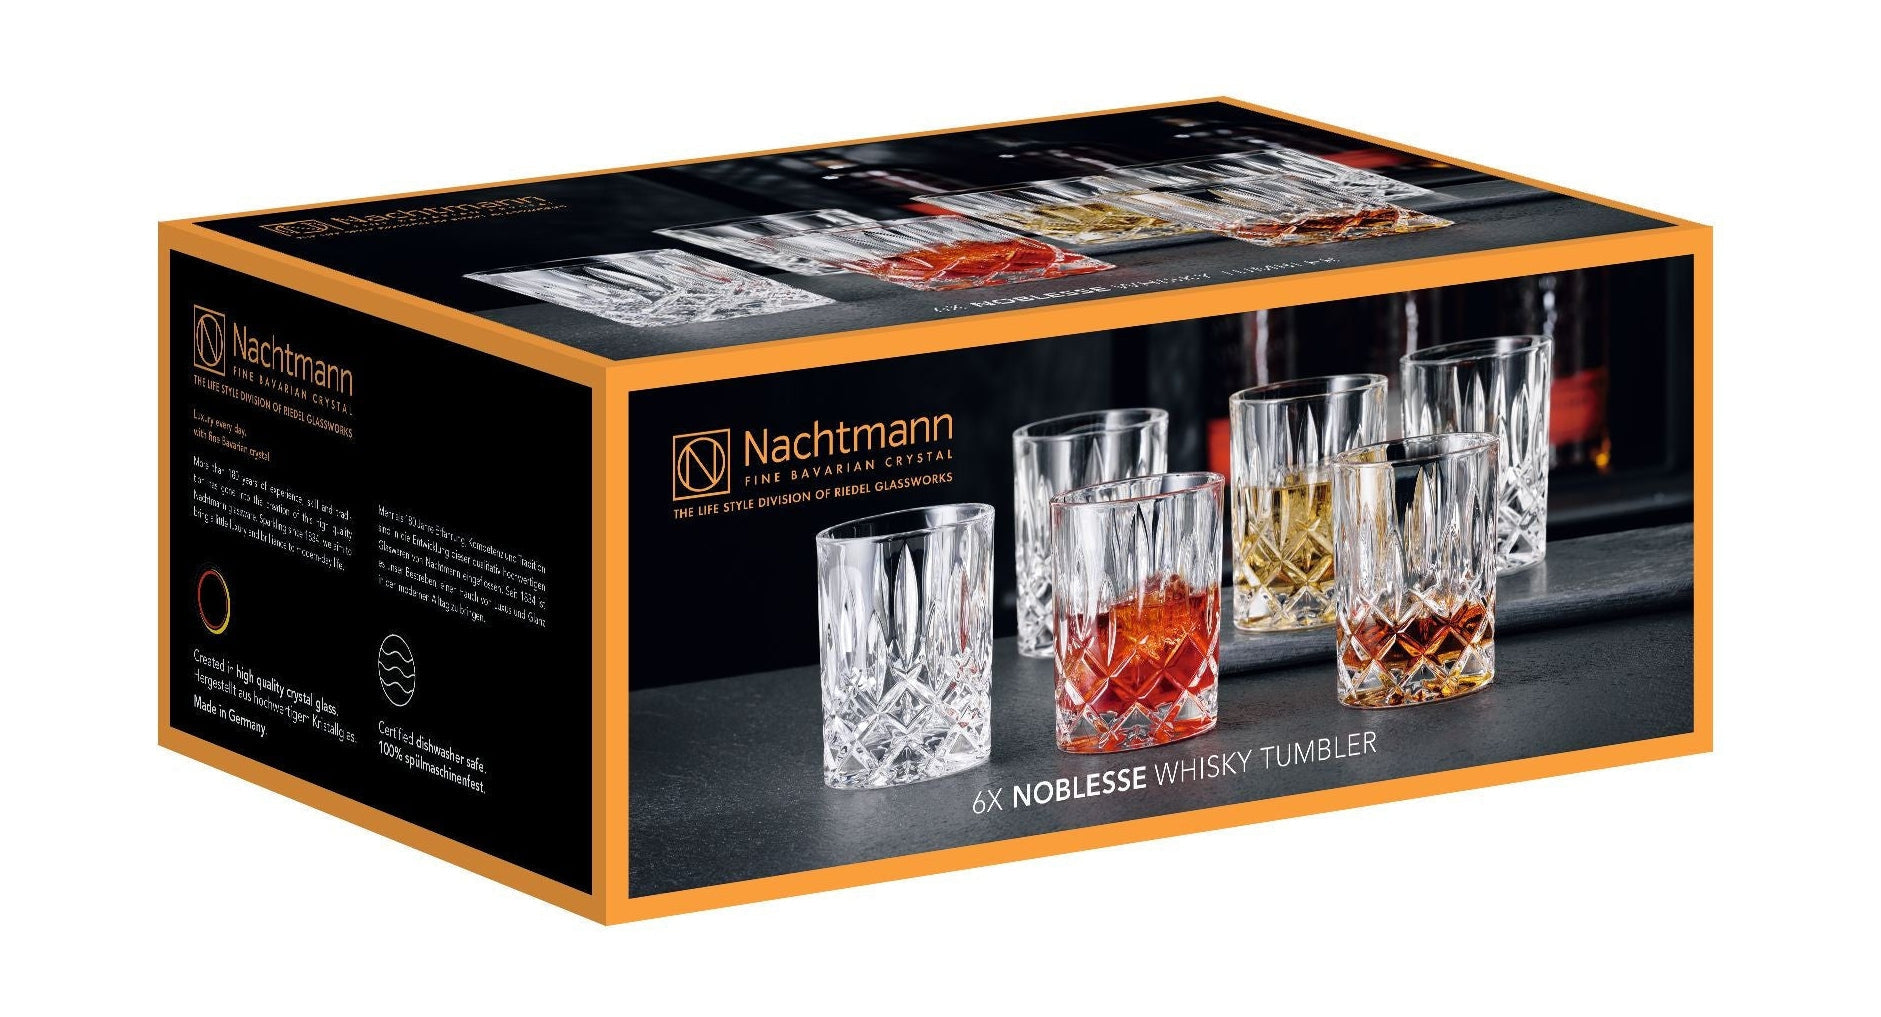 Nachtmann Noblesse威士忌玻璃295毫升，6套